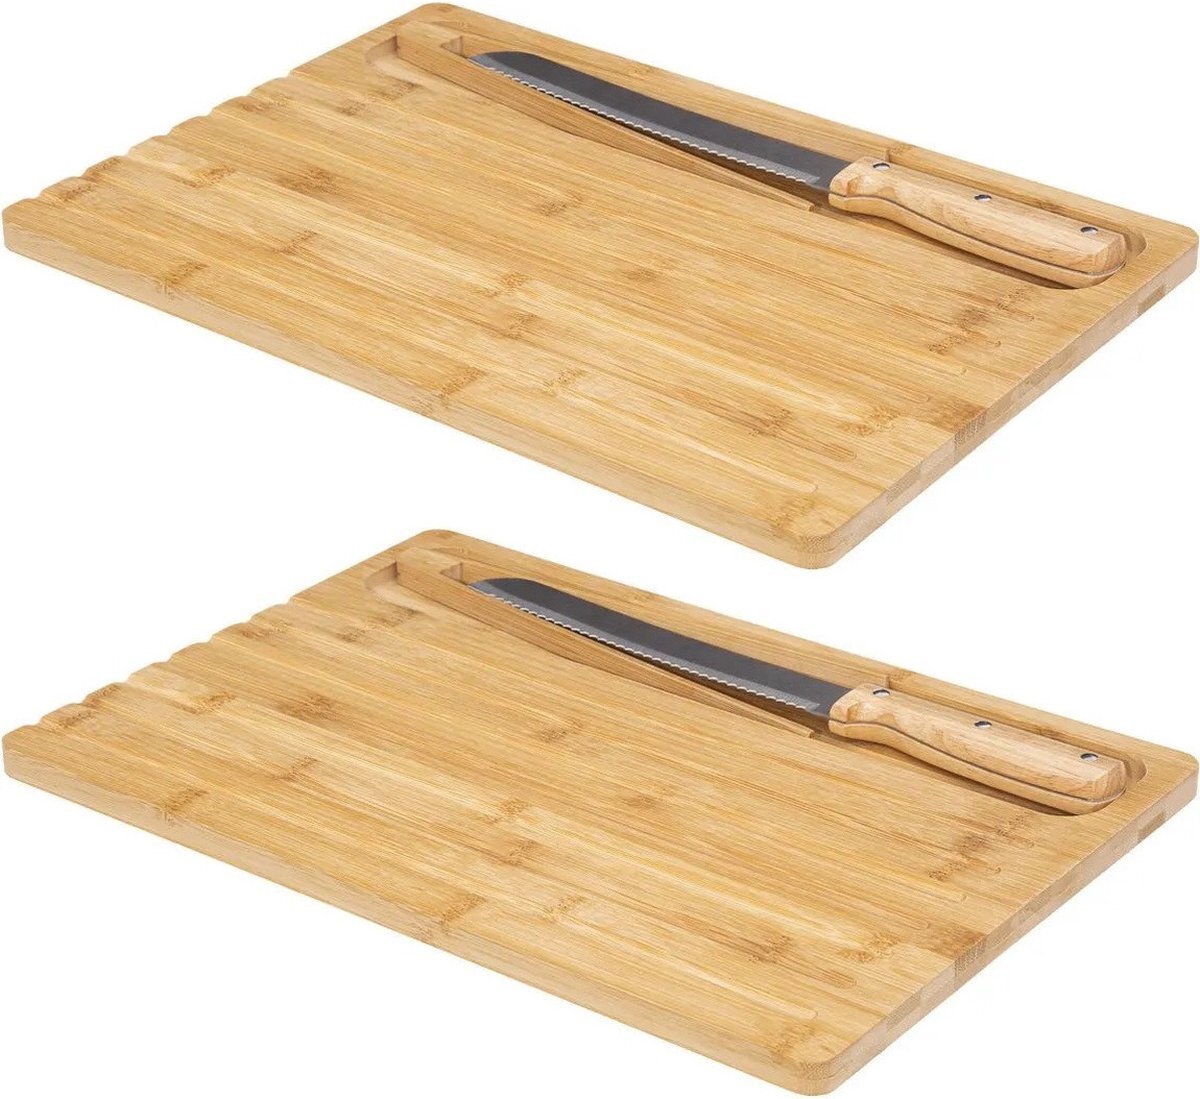 5five 2x Stuks brood snijplank 40 x 27 cm van bamboe hout inclusief broodmes en pincet - Serveerplank - Broodplank